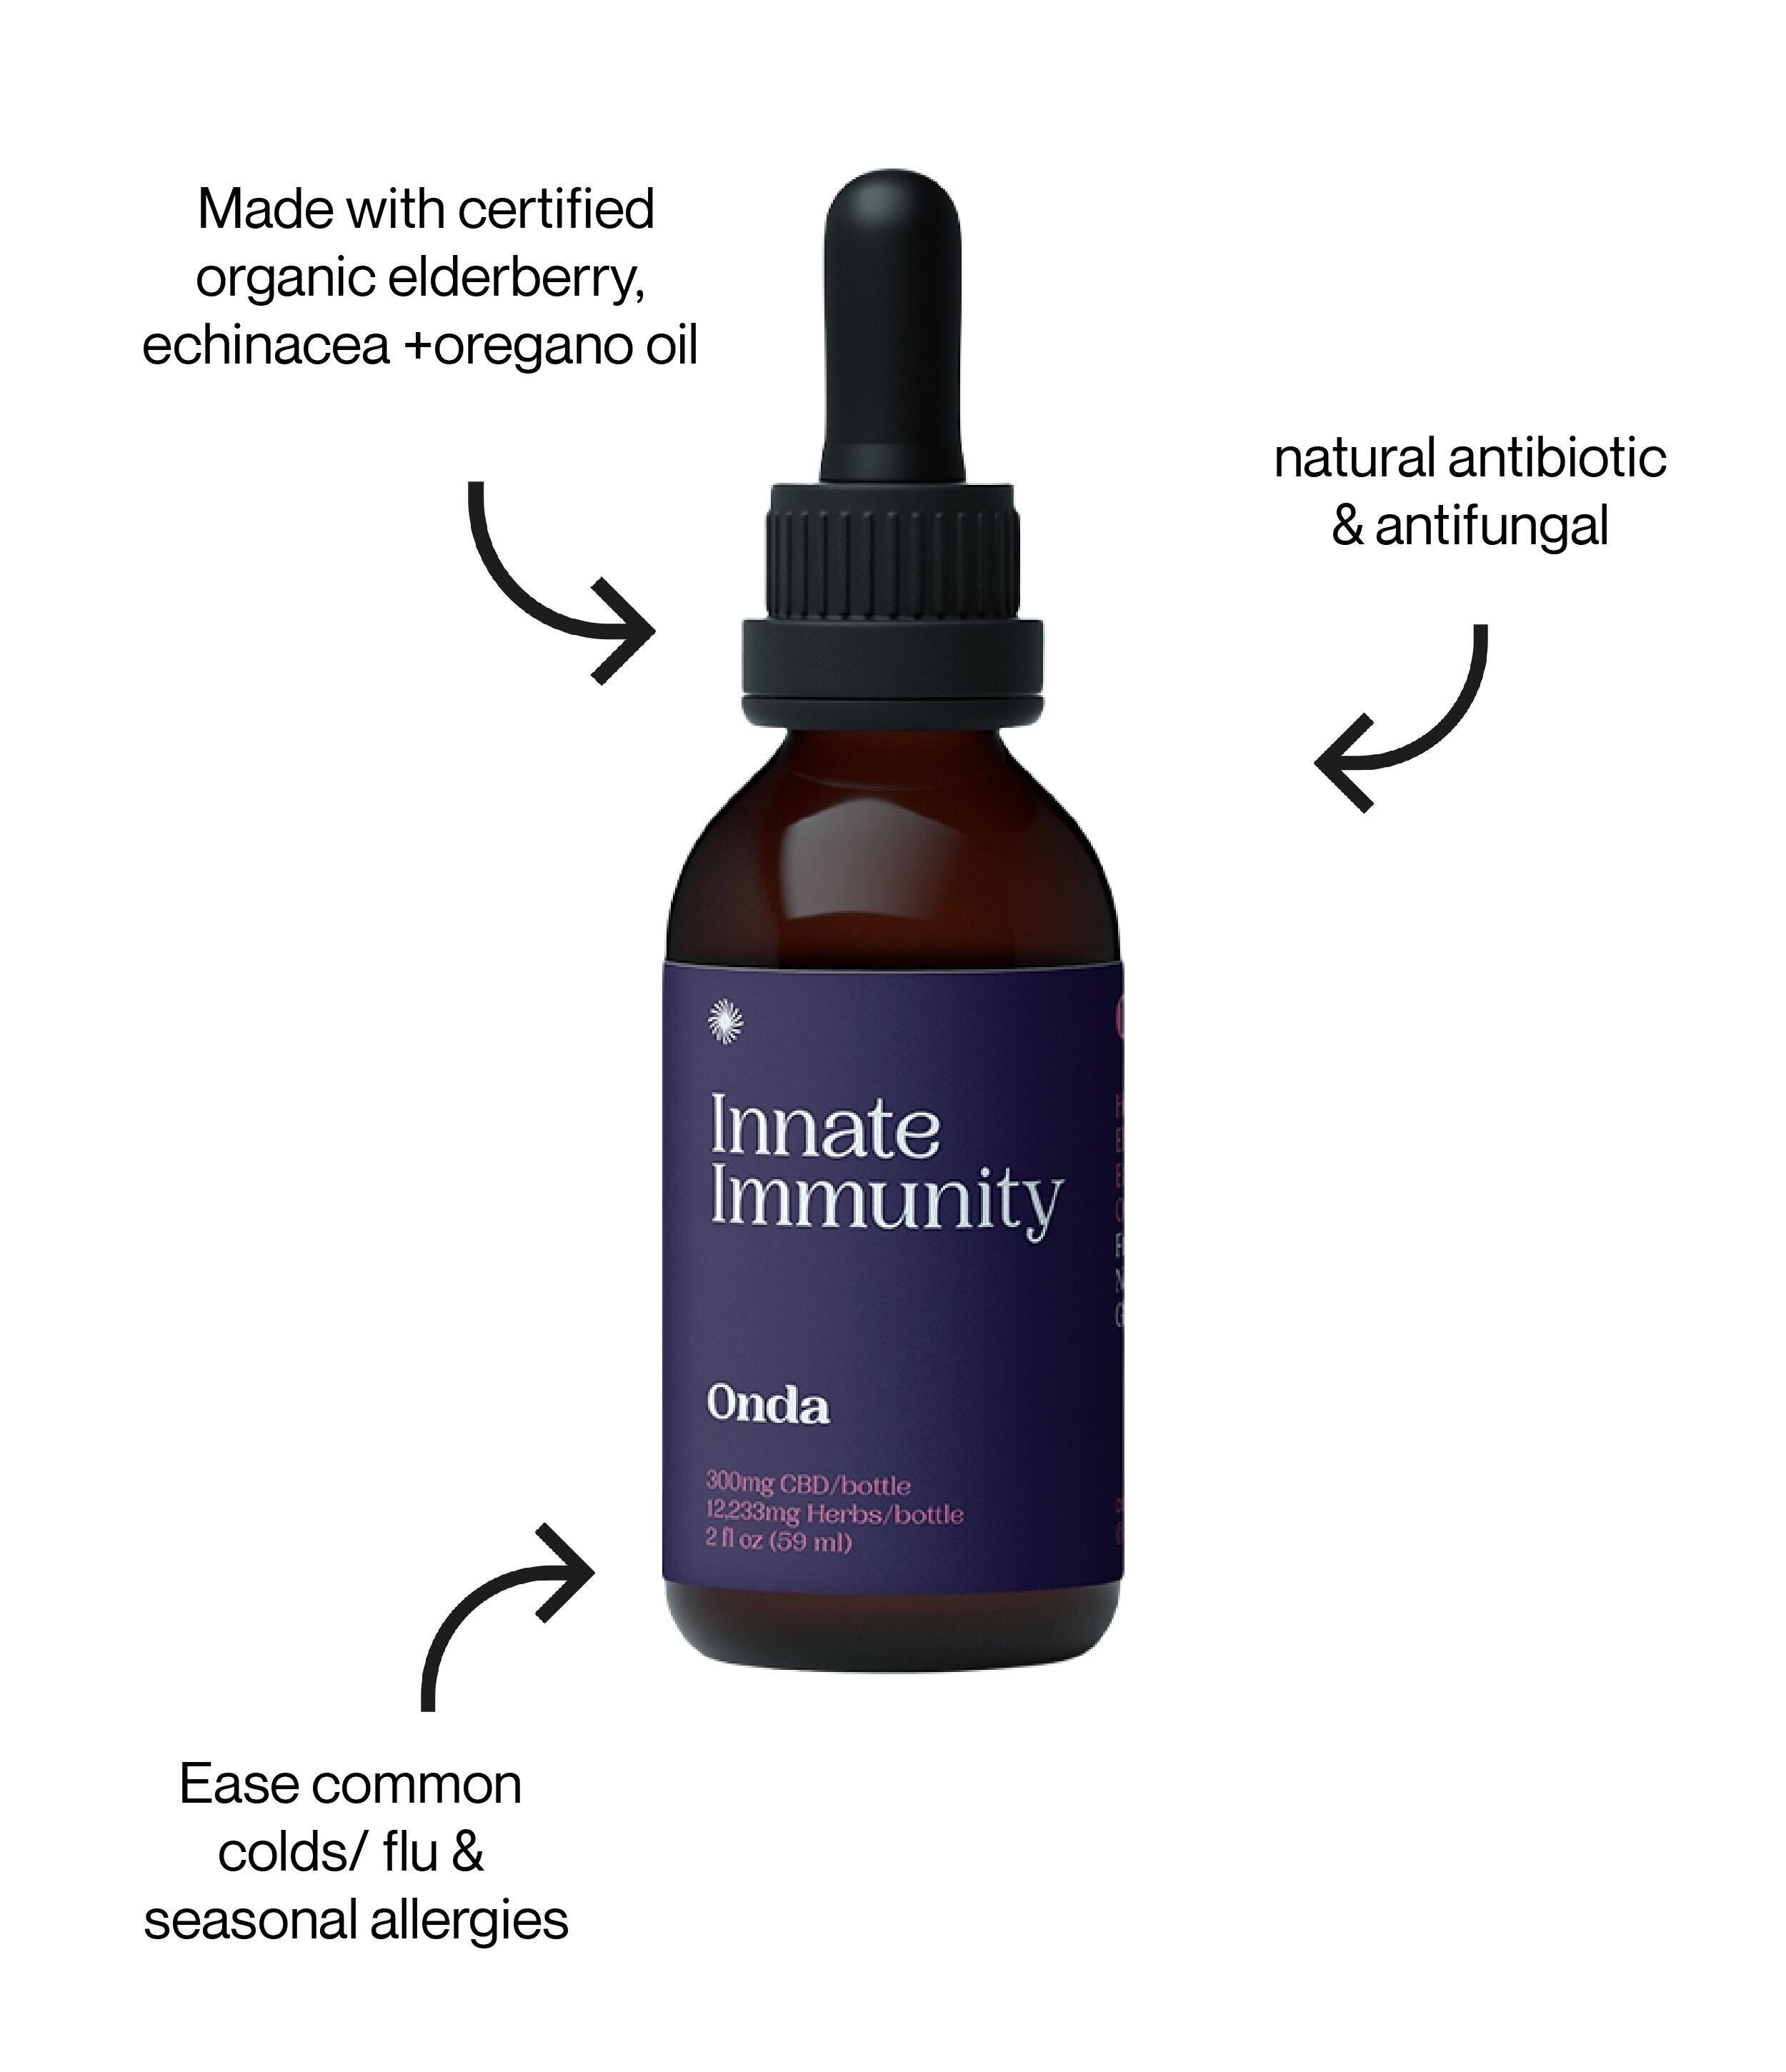 innate immunity - elderberry benefits